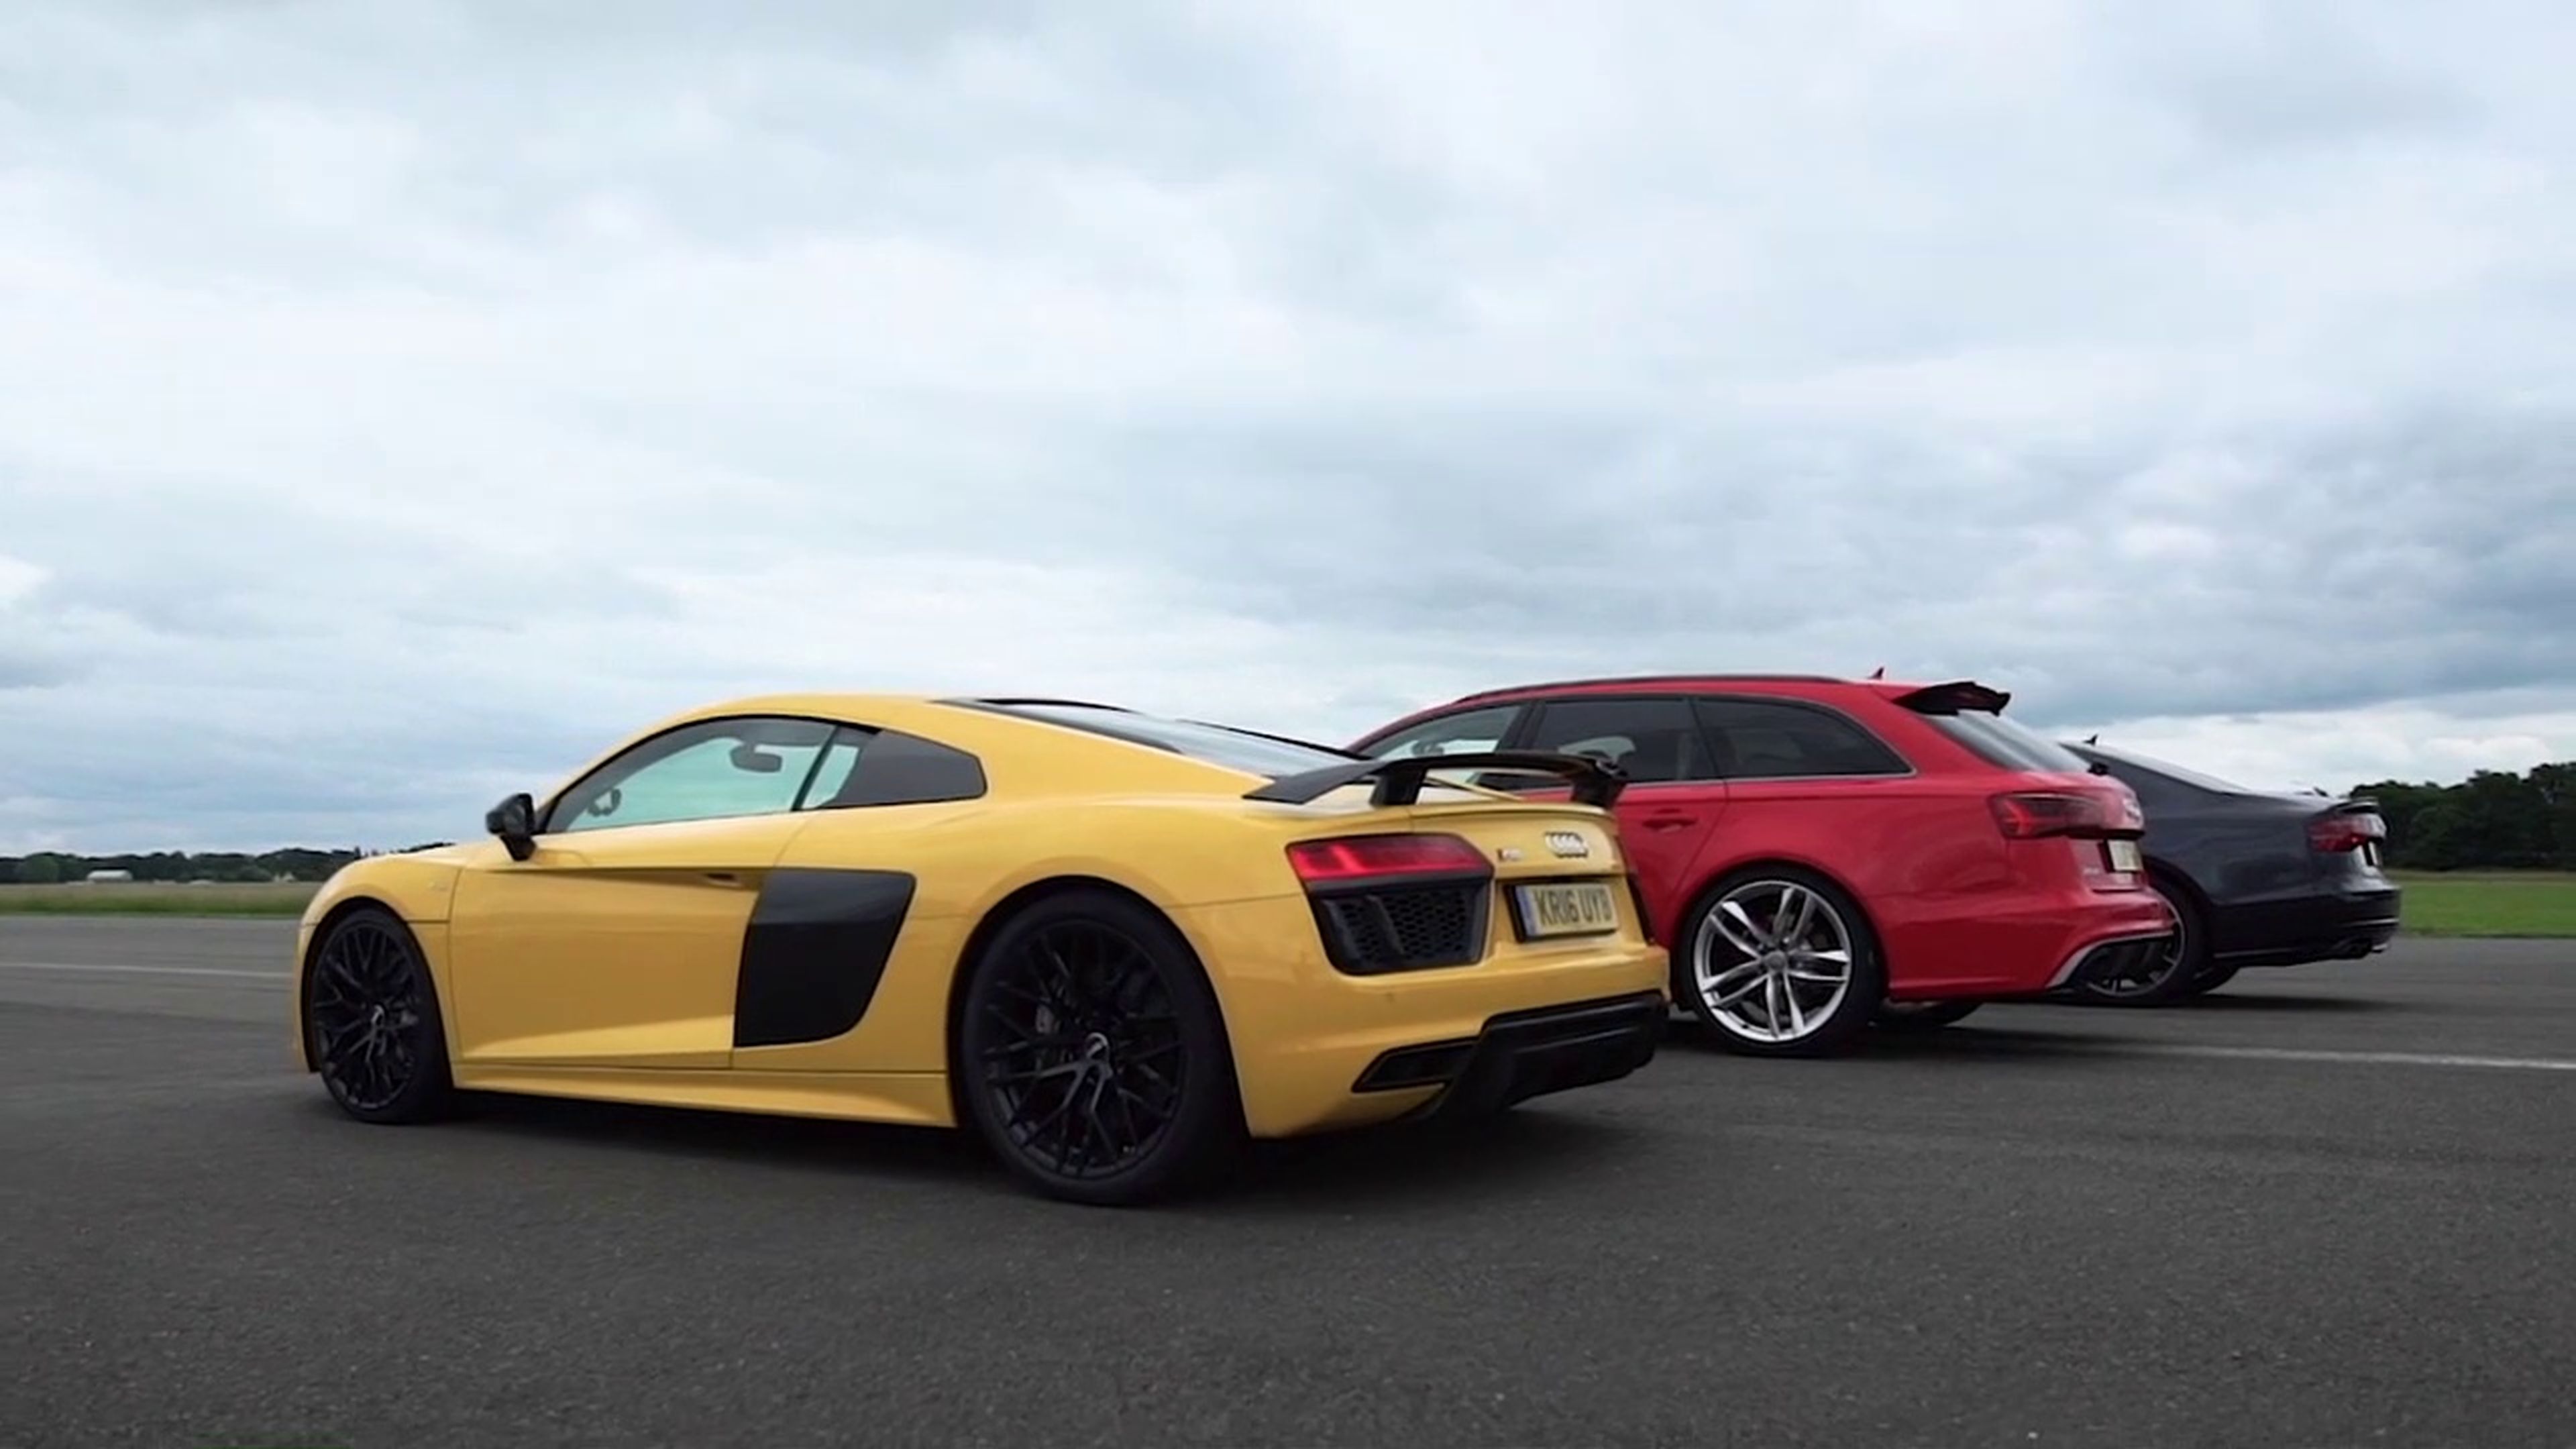 VÍDEO: Audi R8 V10 Plus vs Audi RS6 vs Audi S8, ¿cuál acelera más?